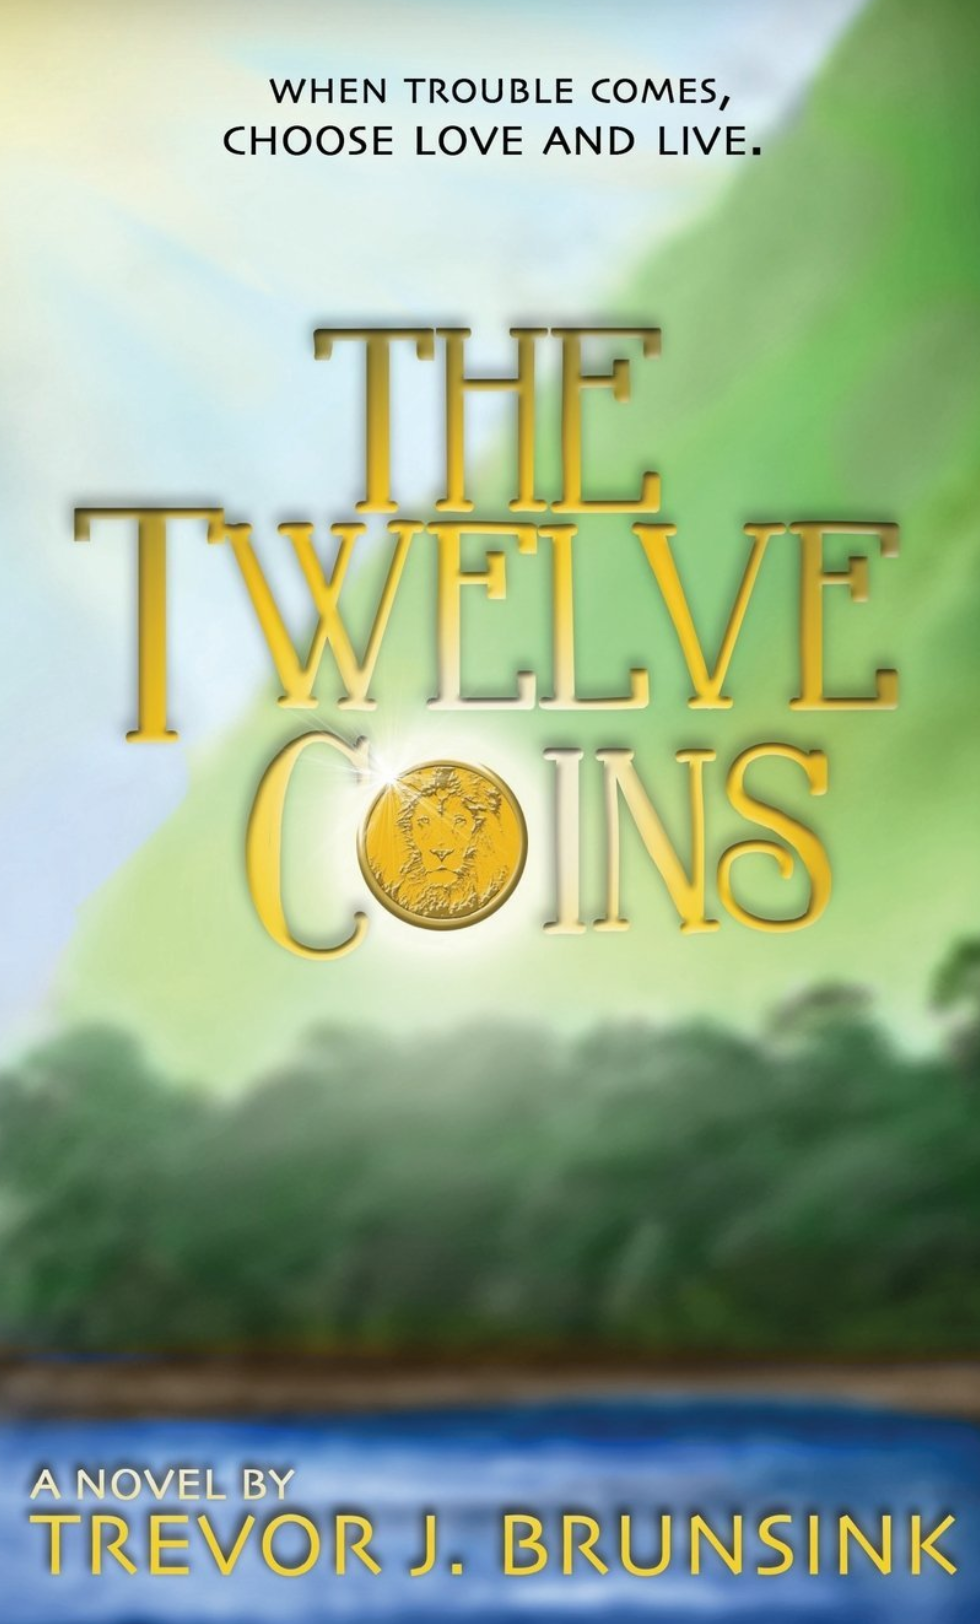 THE TWELVE COINS